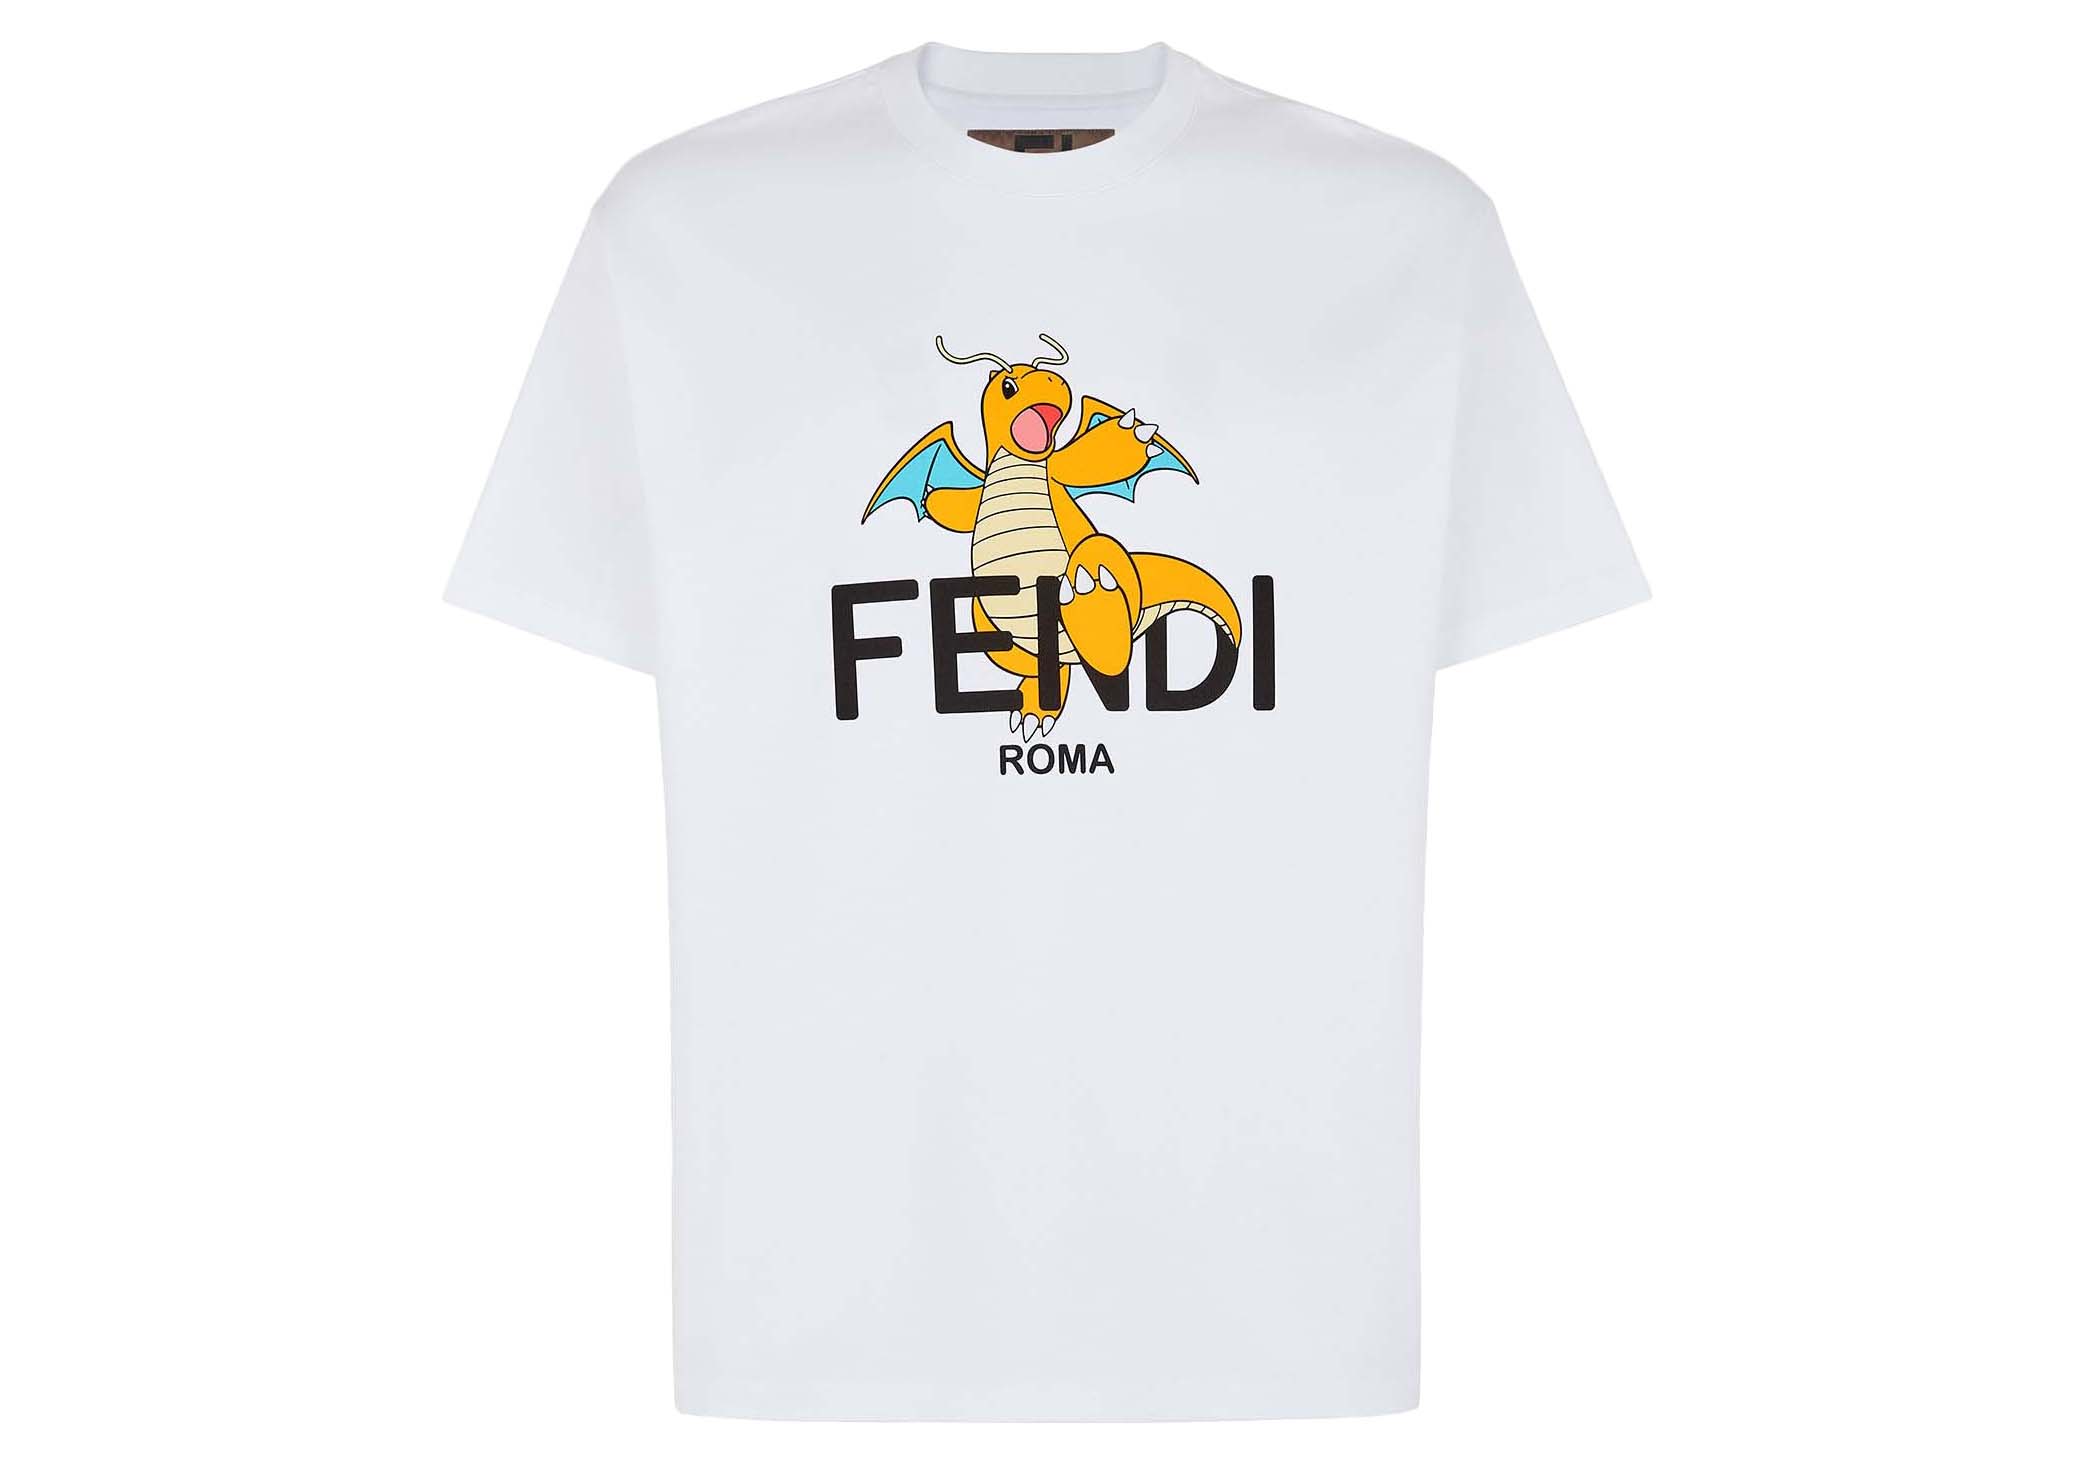 FENDI x FRGMT Tシャツ検討させて頂きます